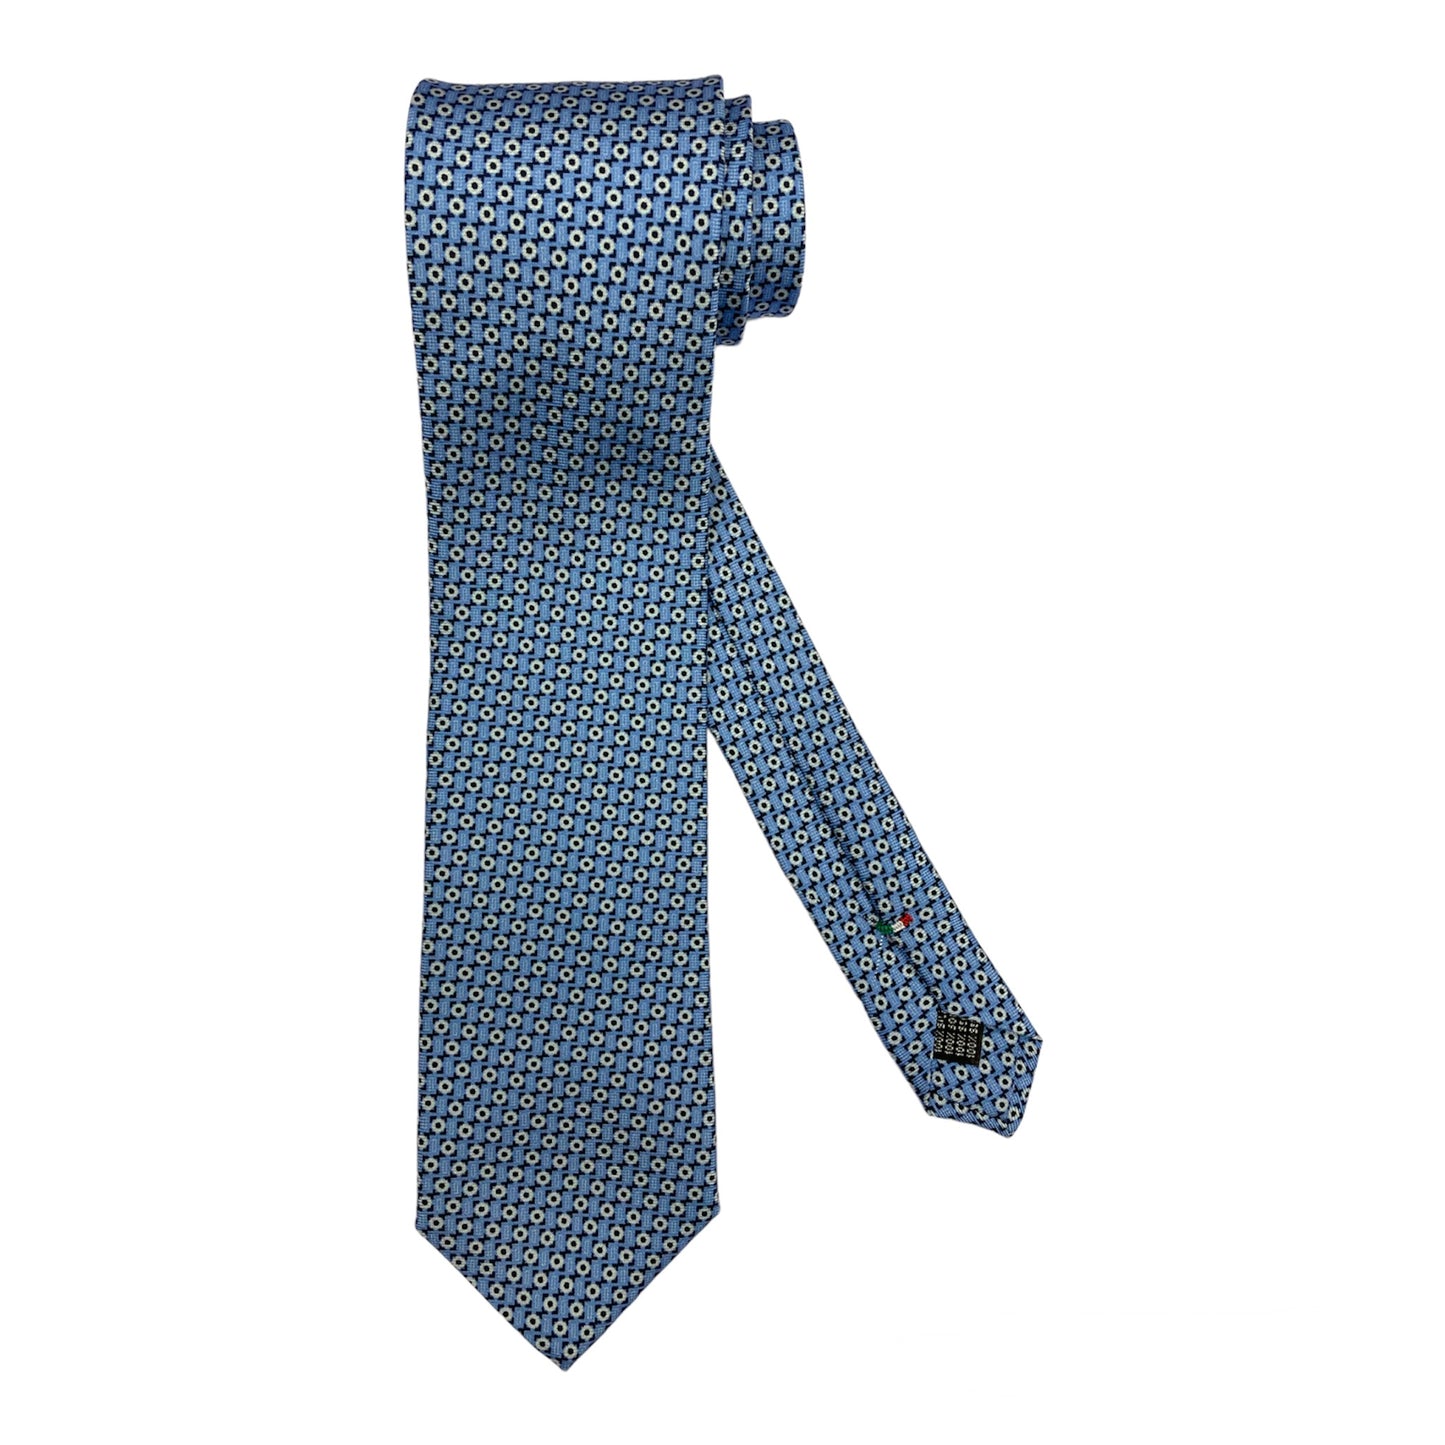 Cravatta seta celeste pois bianco contorni blu